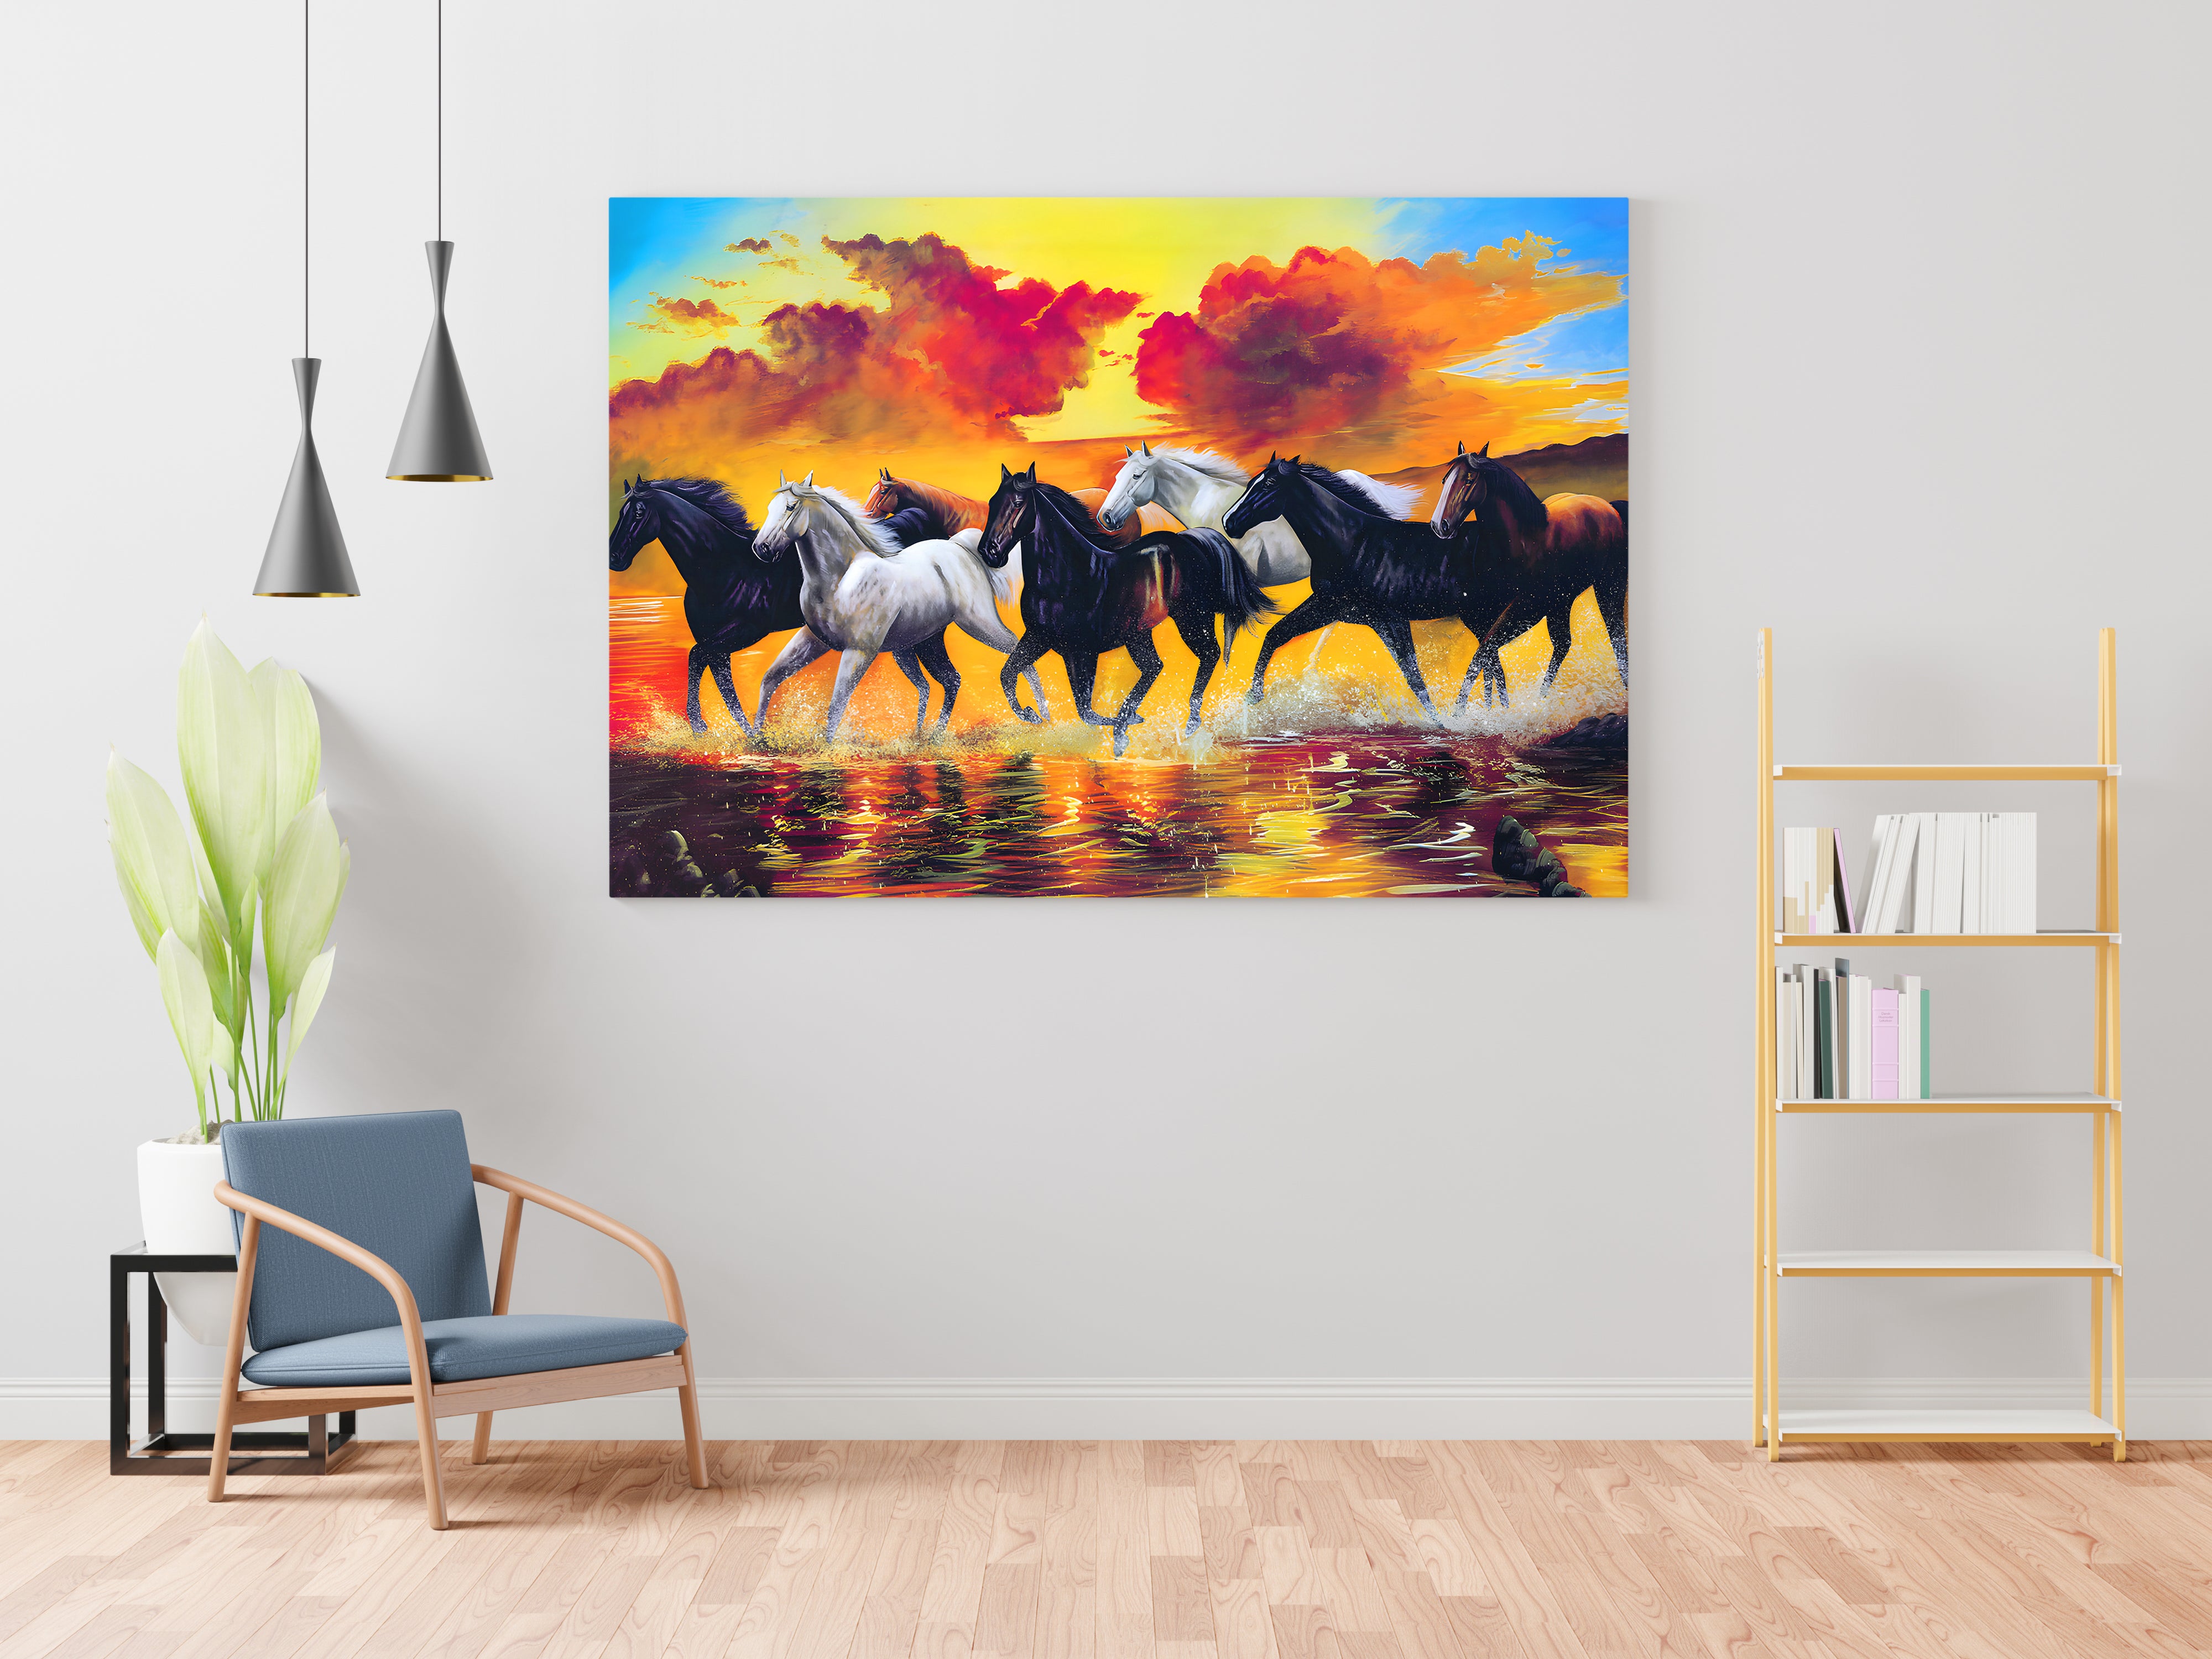 Panoramic Running Seven Horses Abstract Canvas Wall Painting